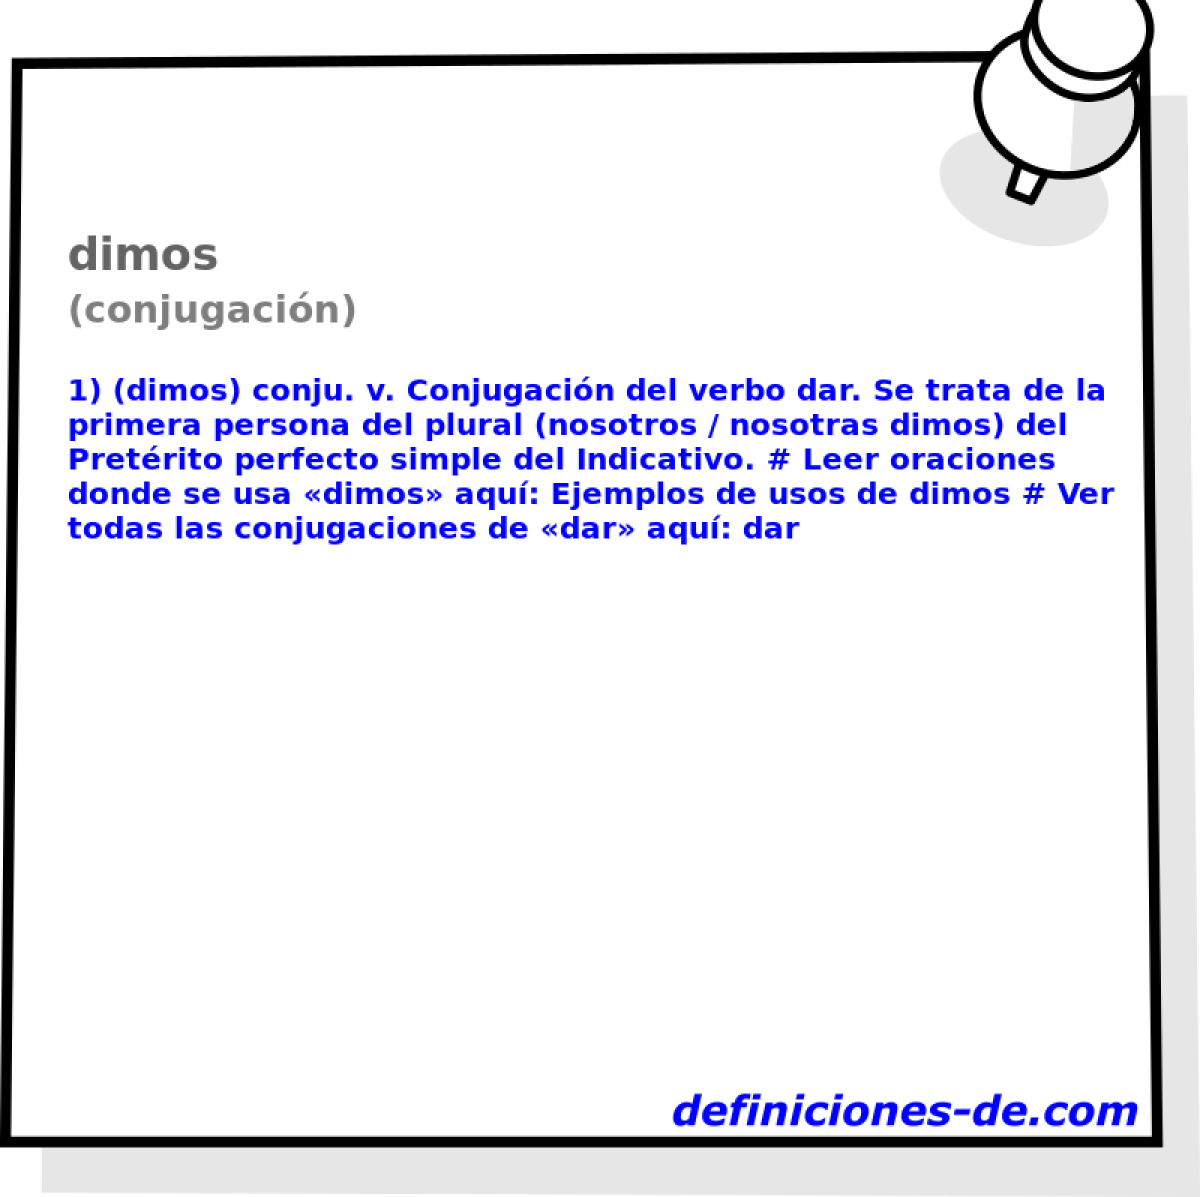 dimos (conjugacin)